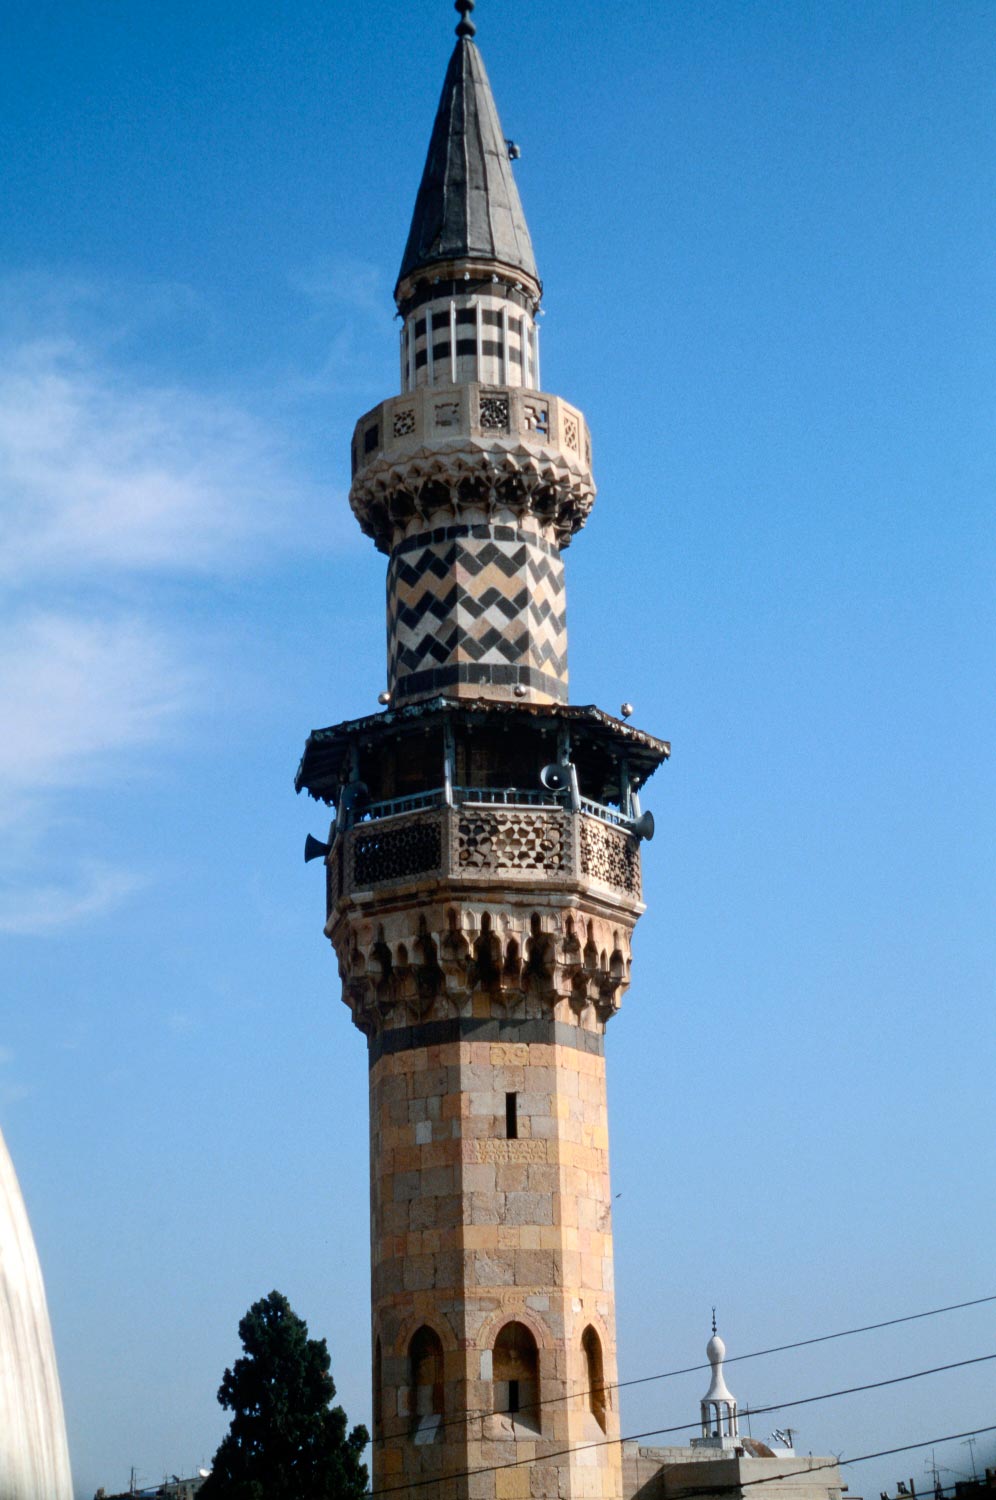 Upper portion of the minaret